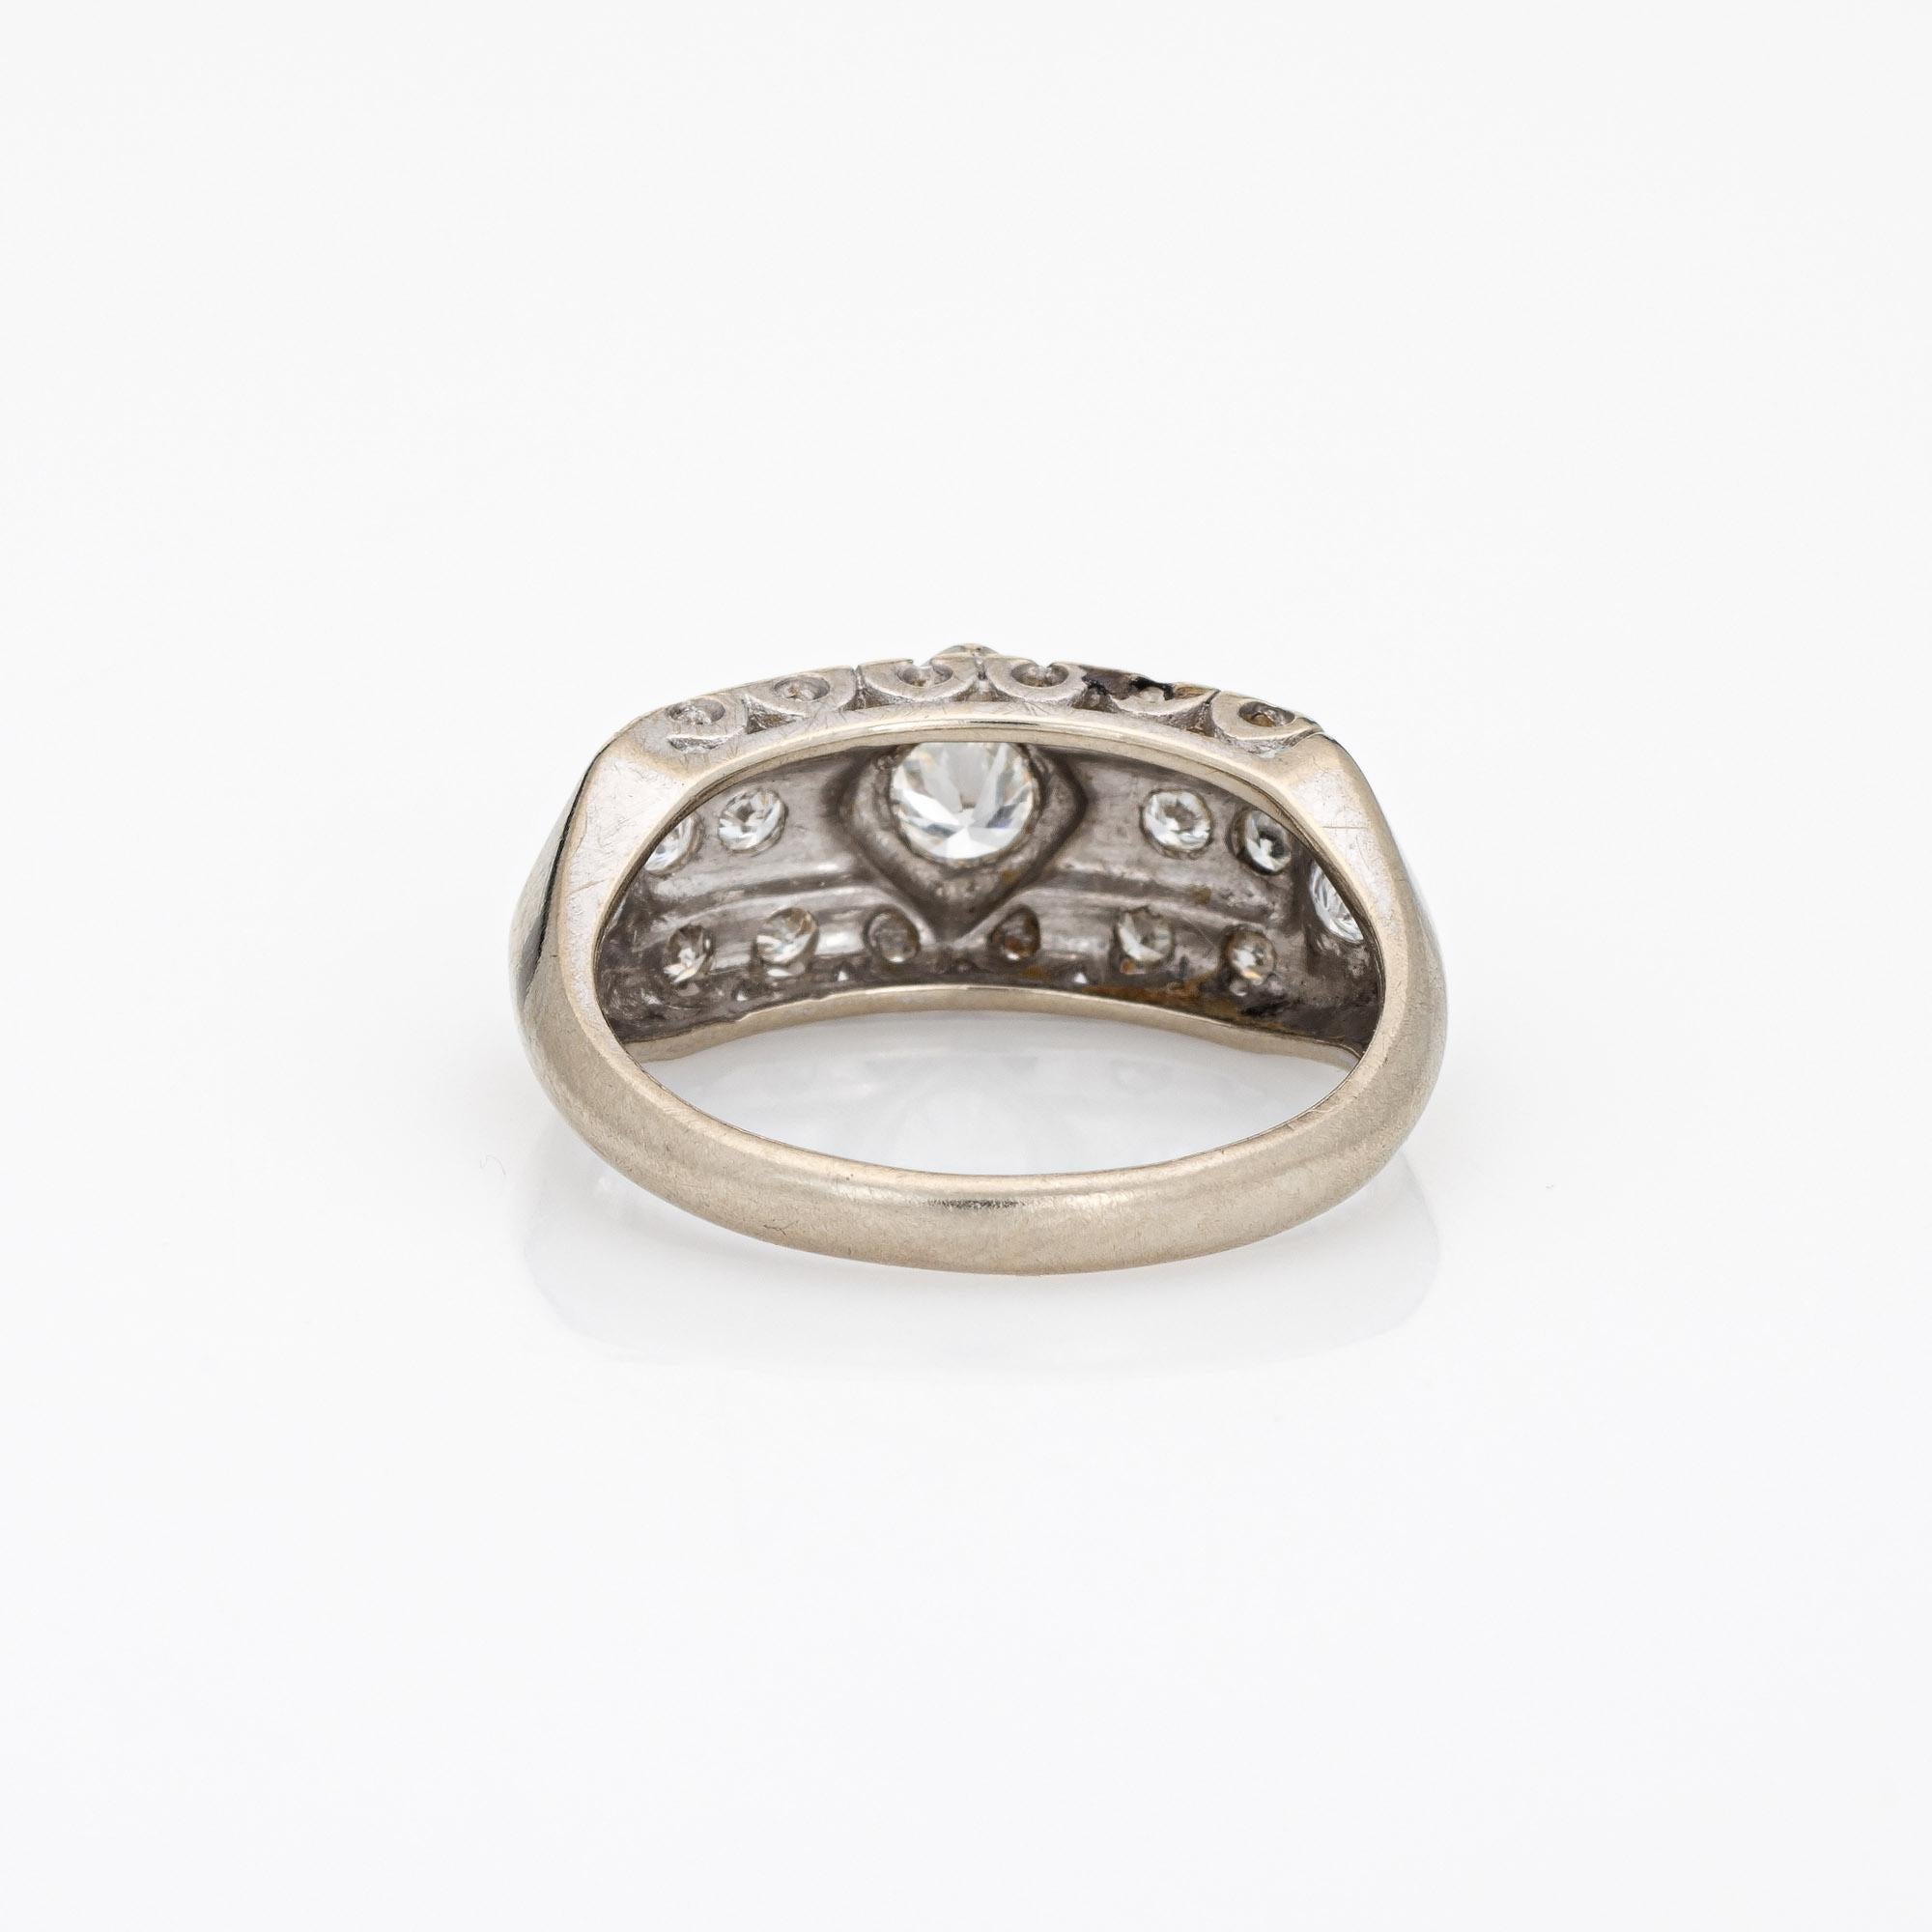 Women's Vintage Art Deco Diamond Ring 14k White Gold Band Estate Fine Jewelry Sz 5.75